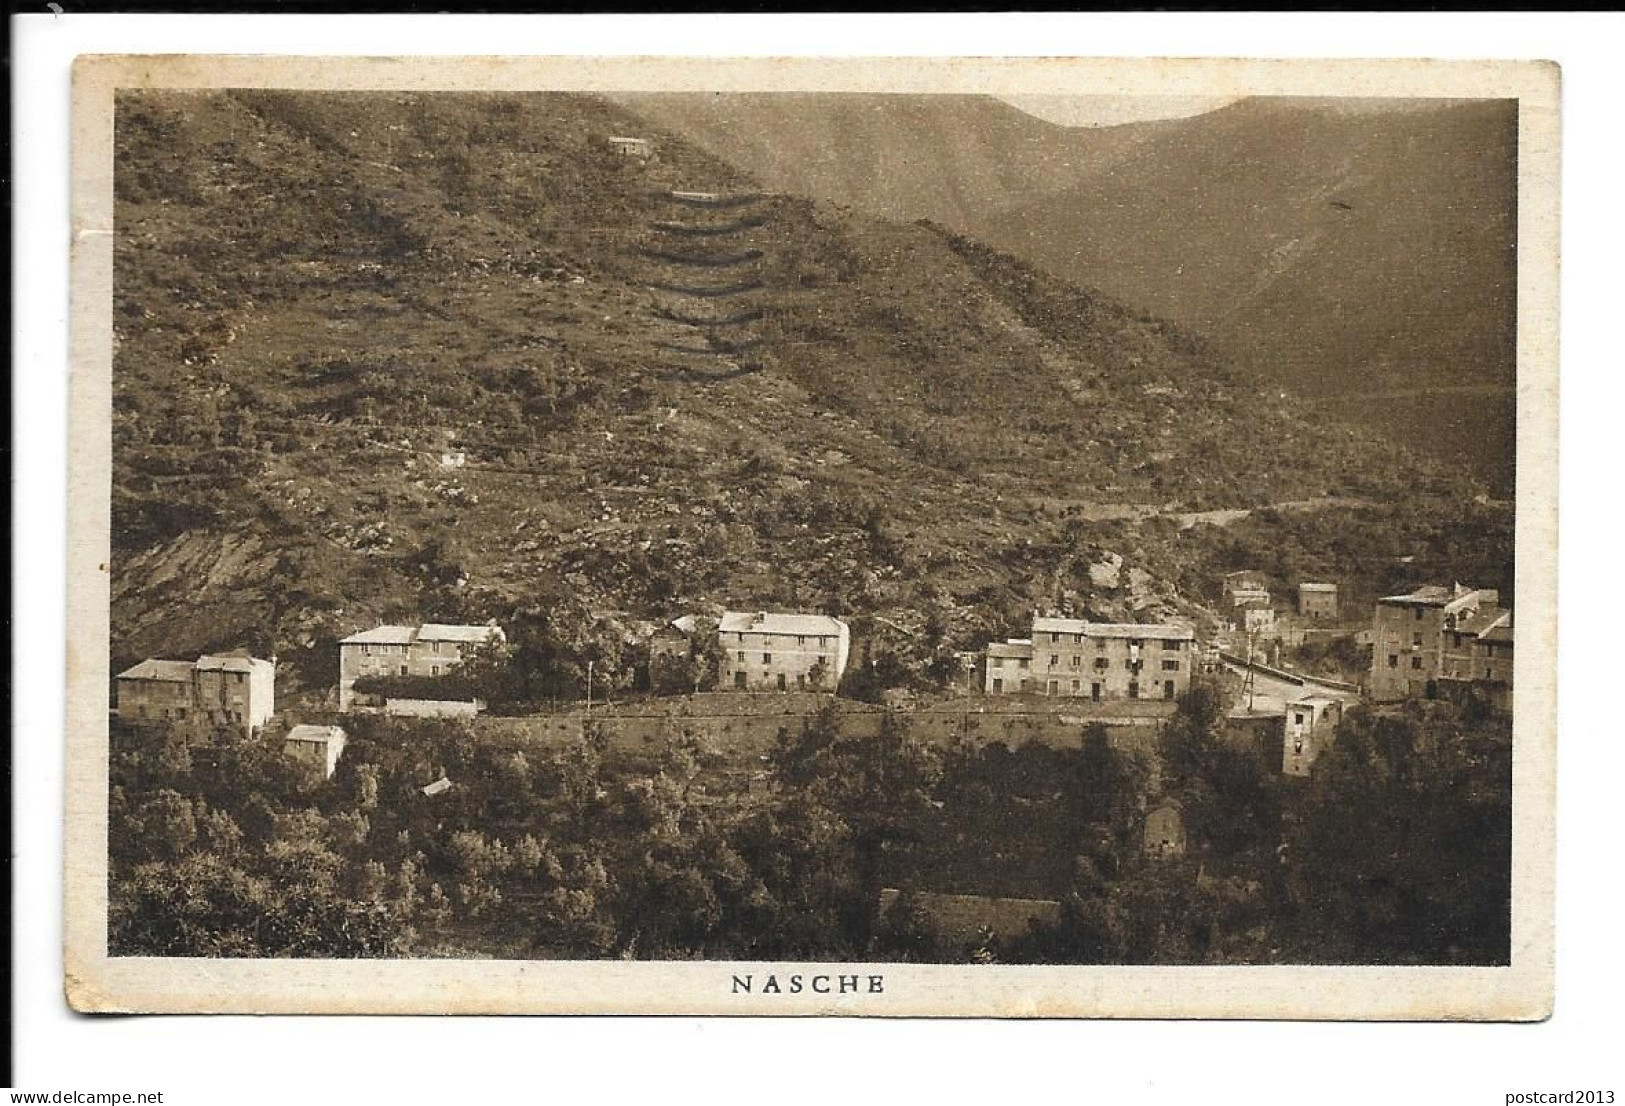 CARTOLINA DI LOCALITA' NASCHE ( GENOVA ) , 1940 . - Genova (Genoa)